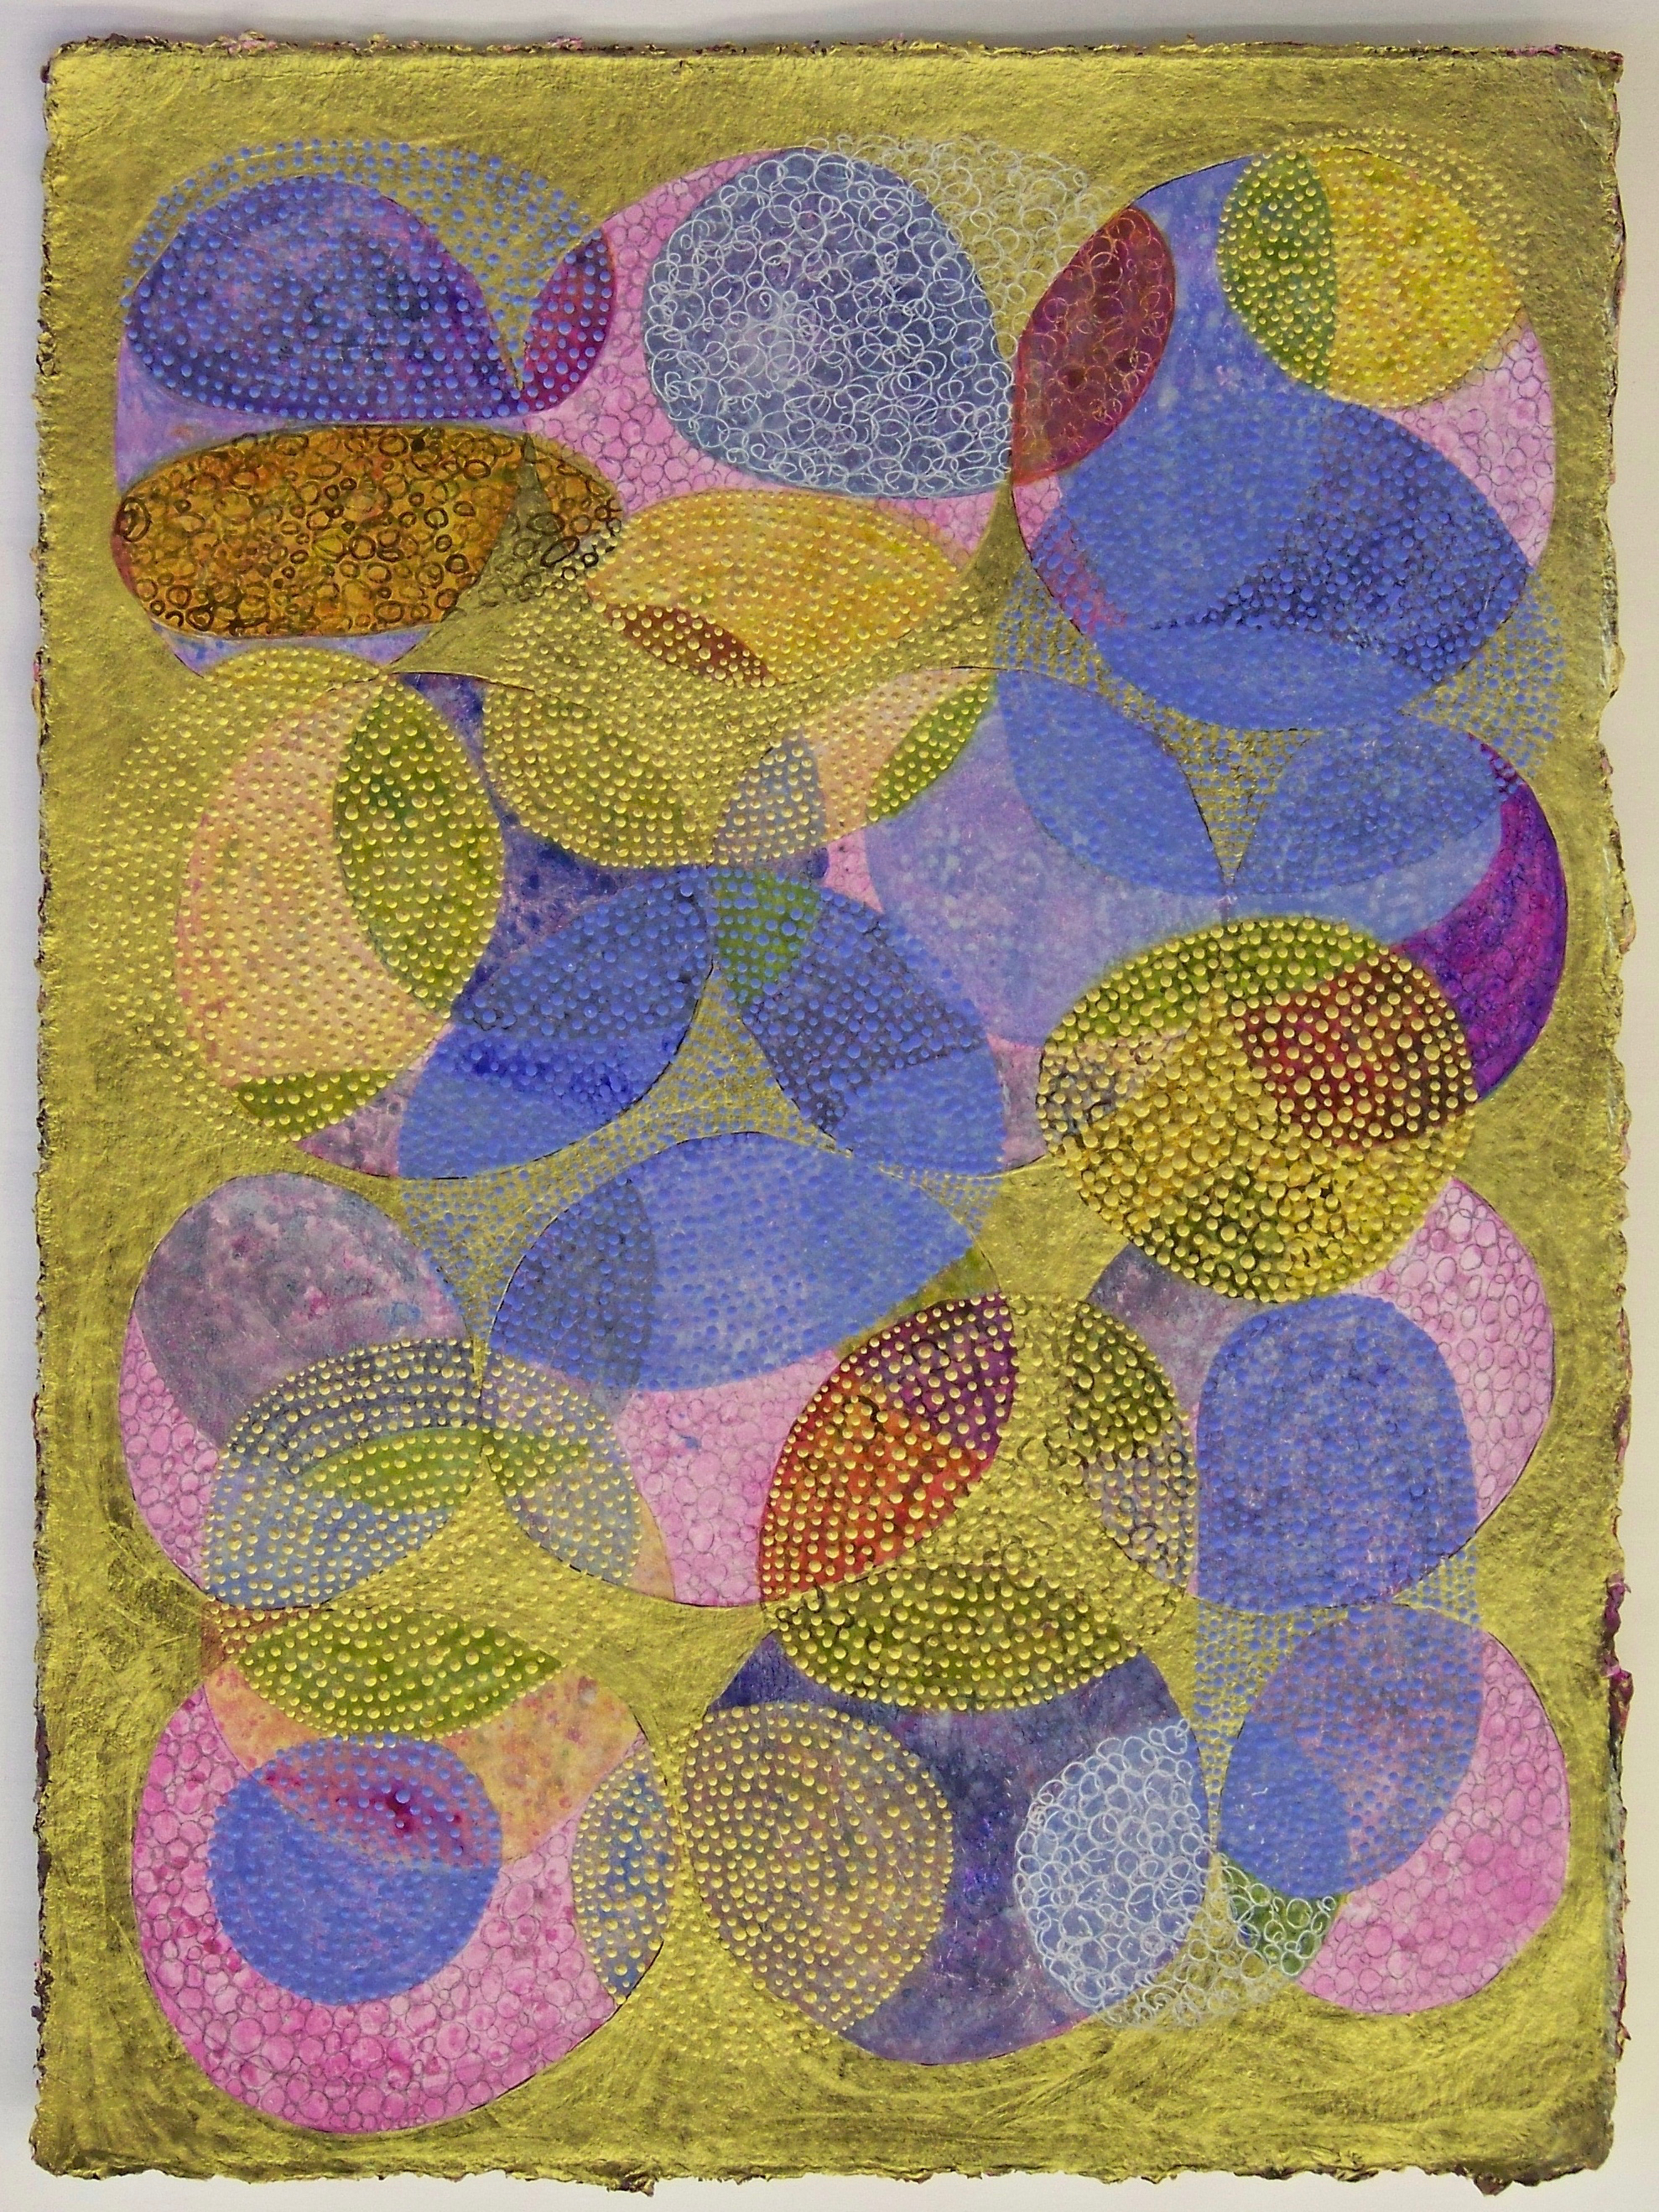  D. Driscoll,  Inner Garden 04 , acrylic on paper, 16x12 